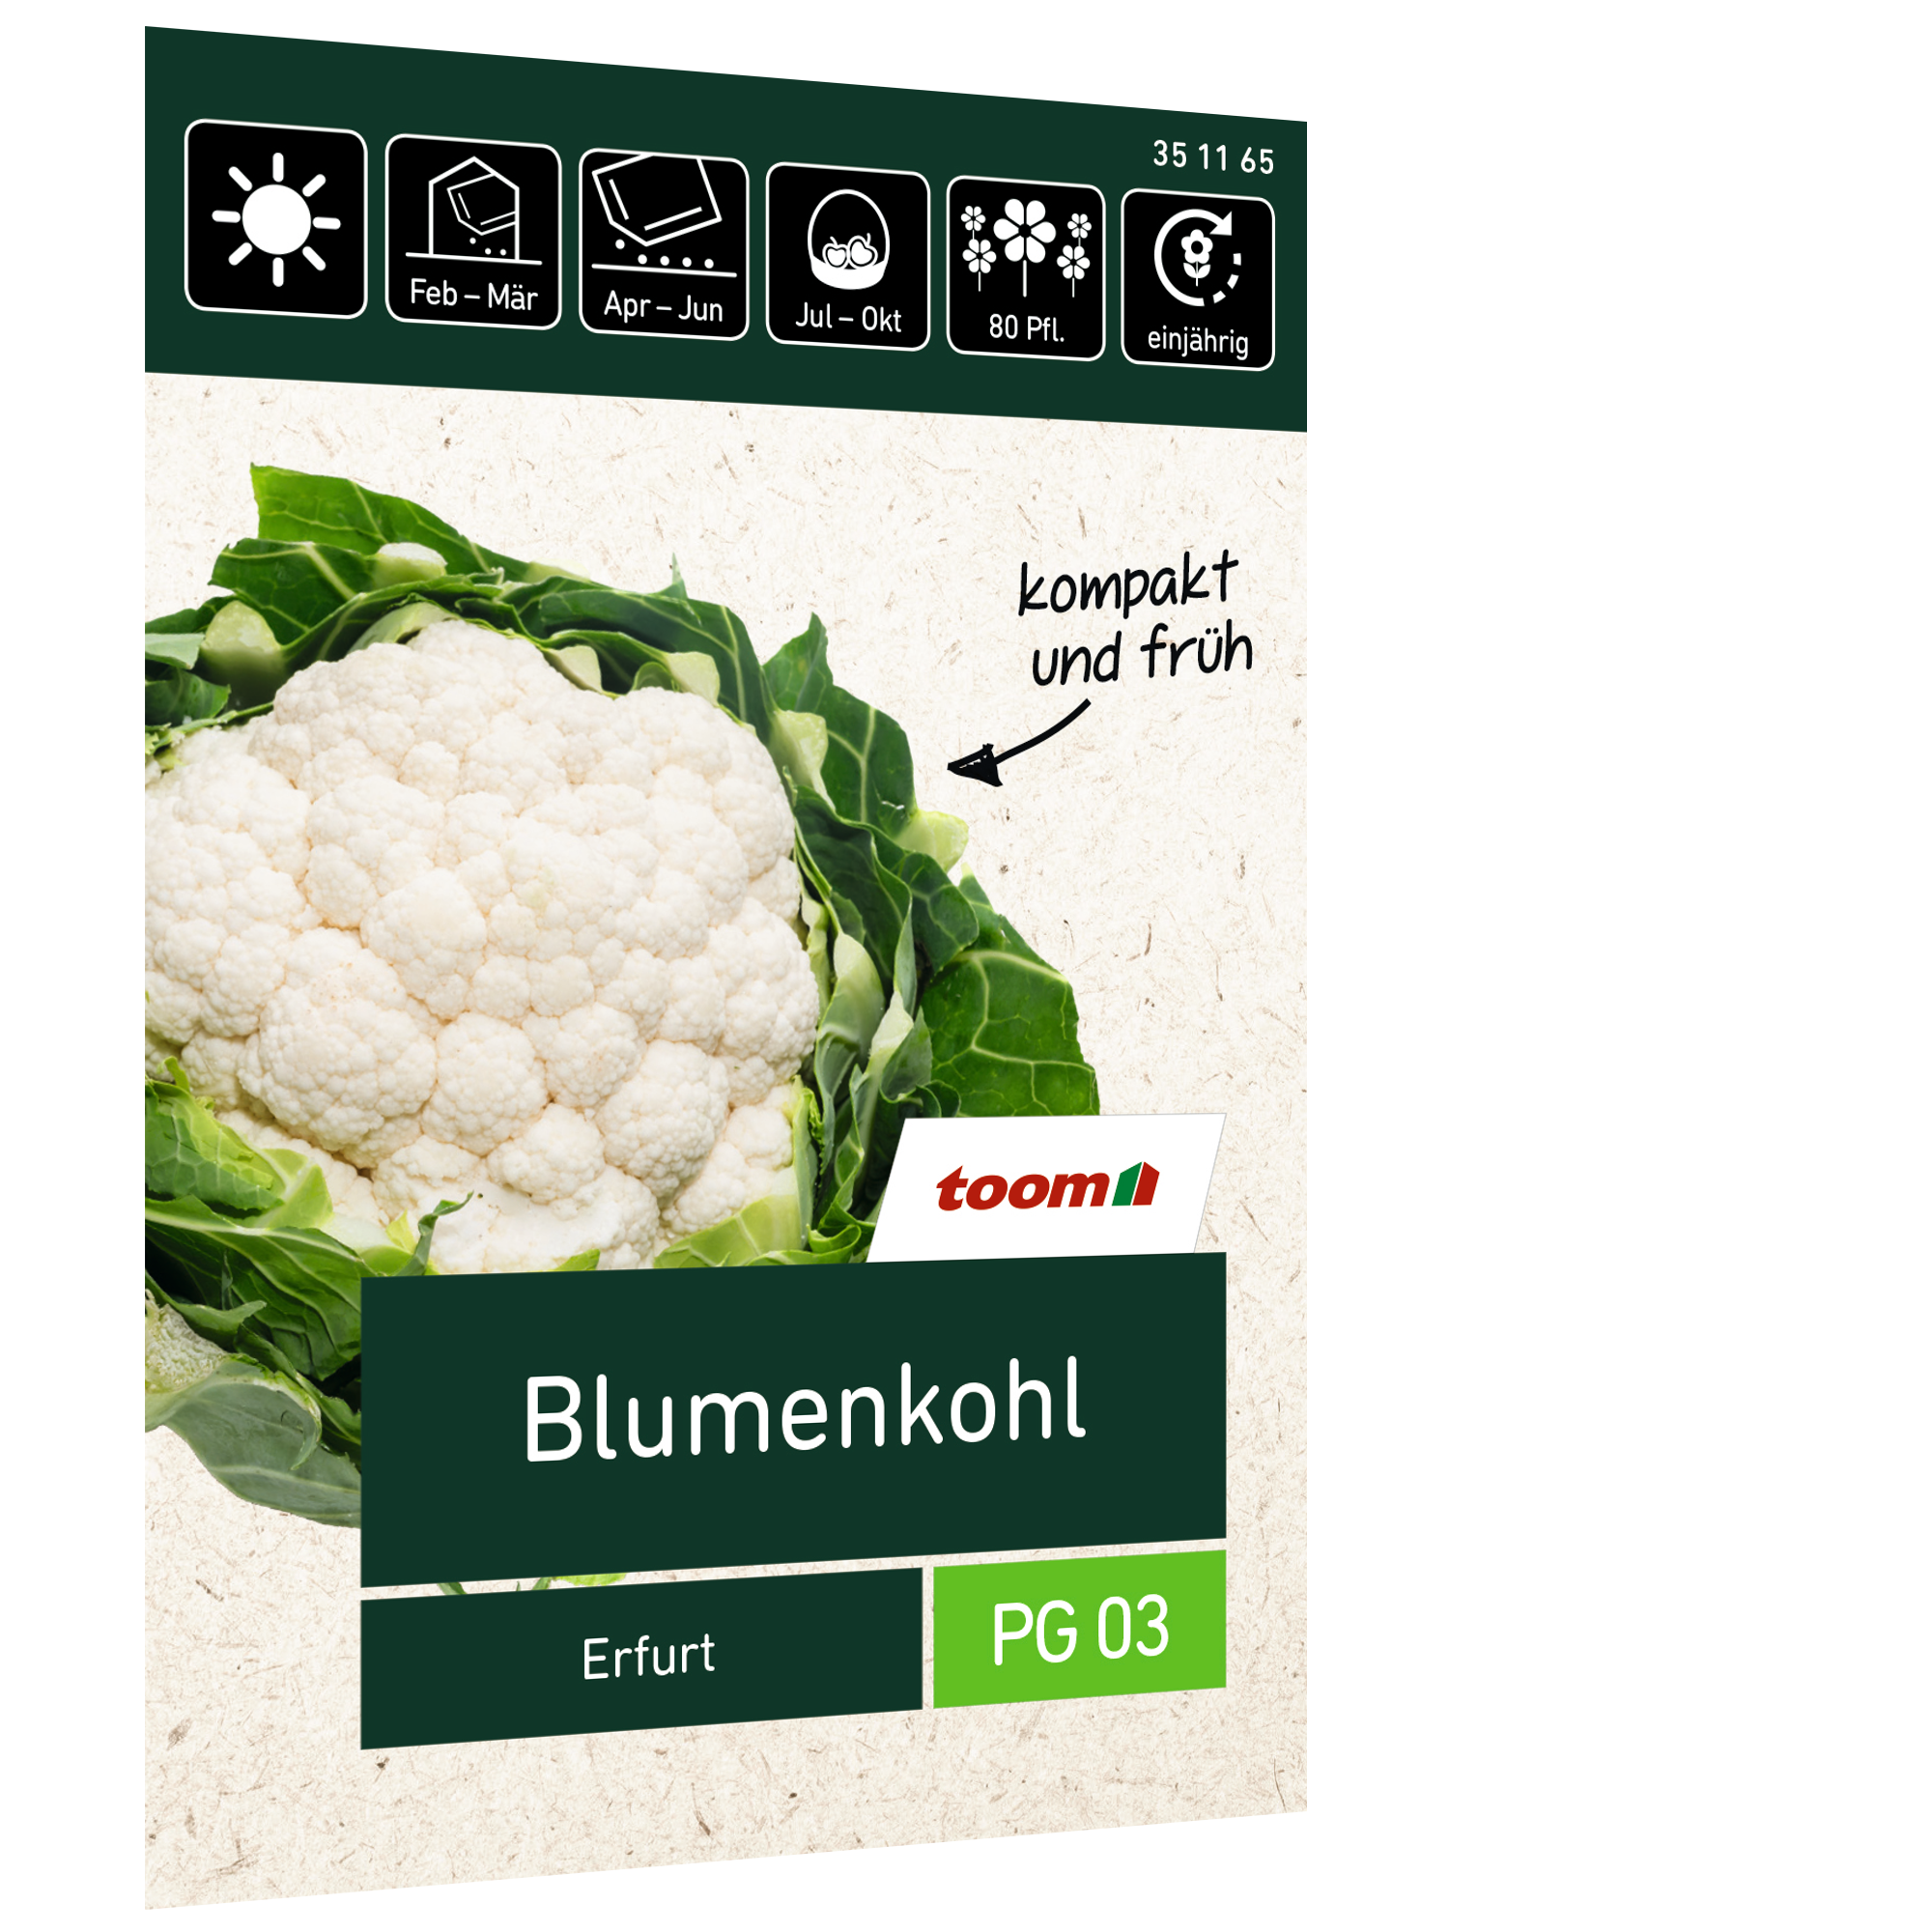 Blumenkohl 'Erfurt' + product picture